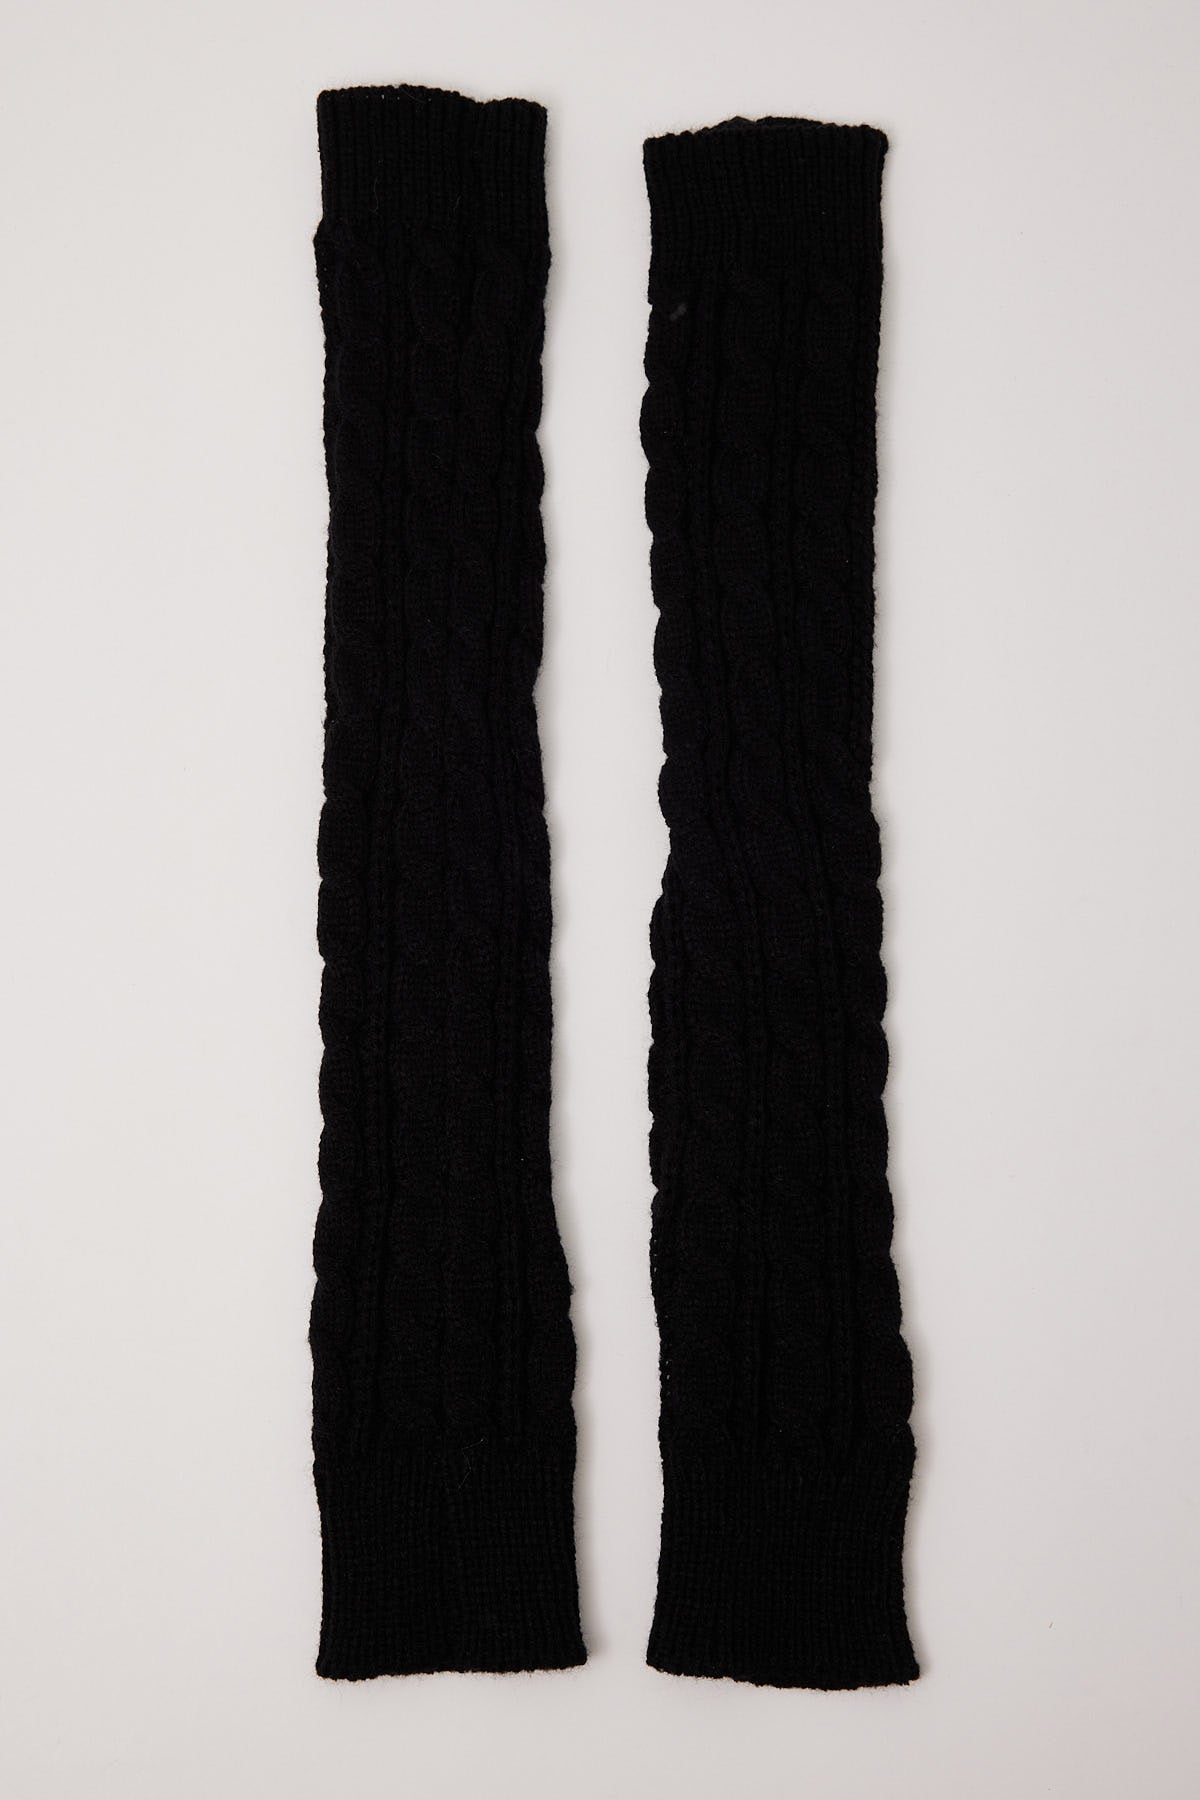 Token Knit Arm Warmers Black – Universal Store